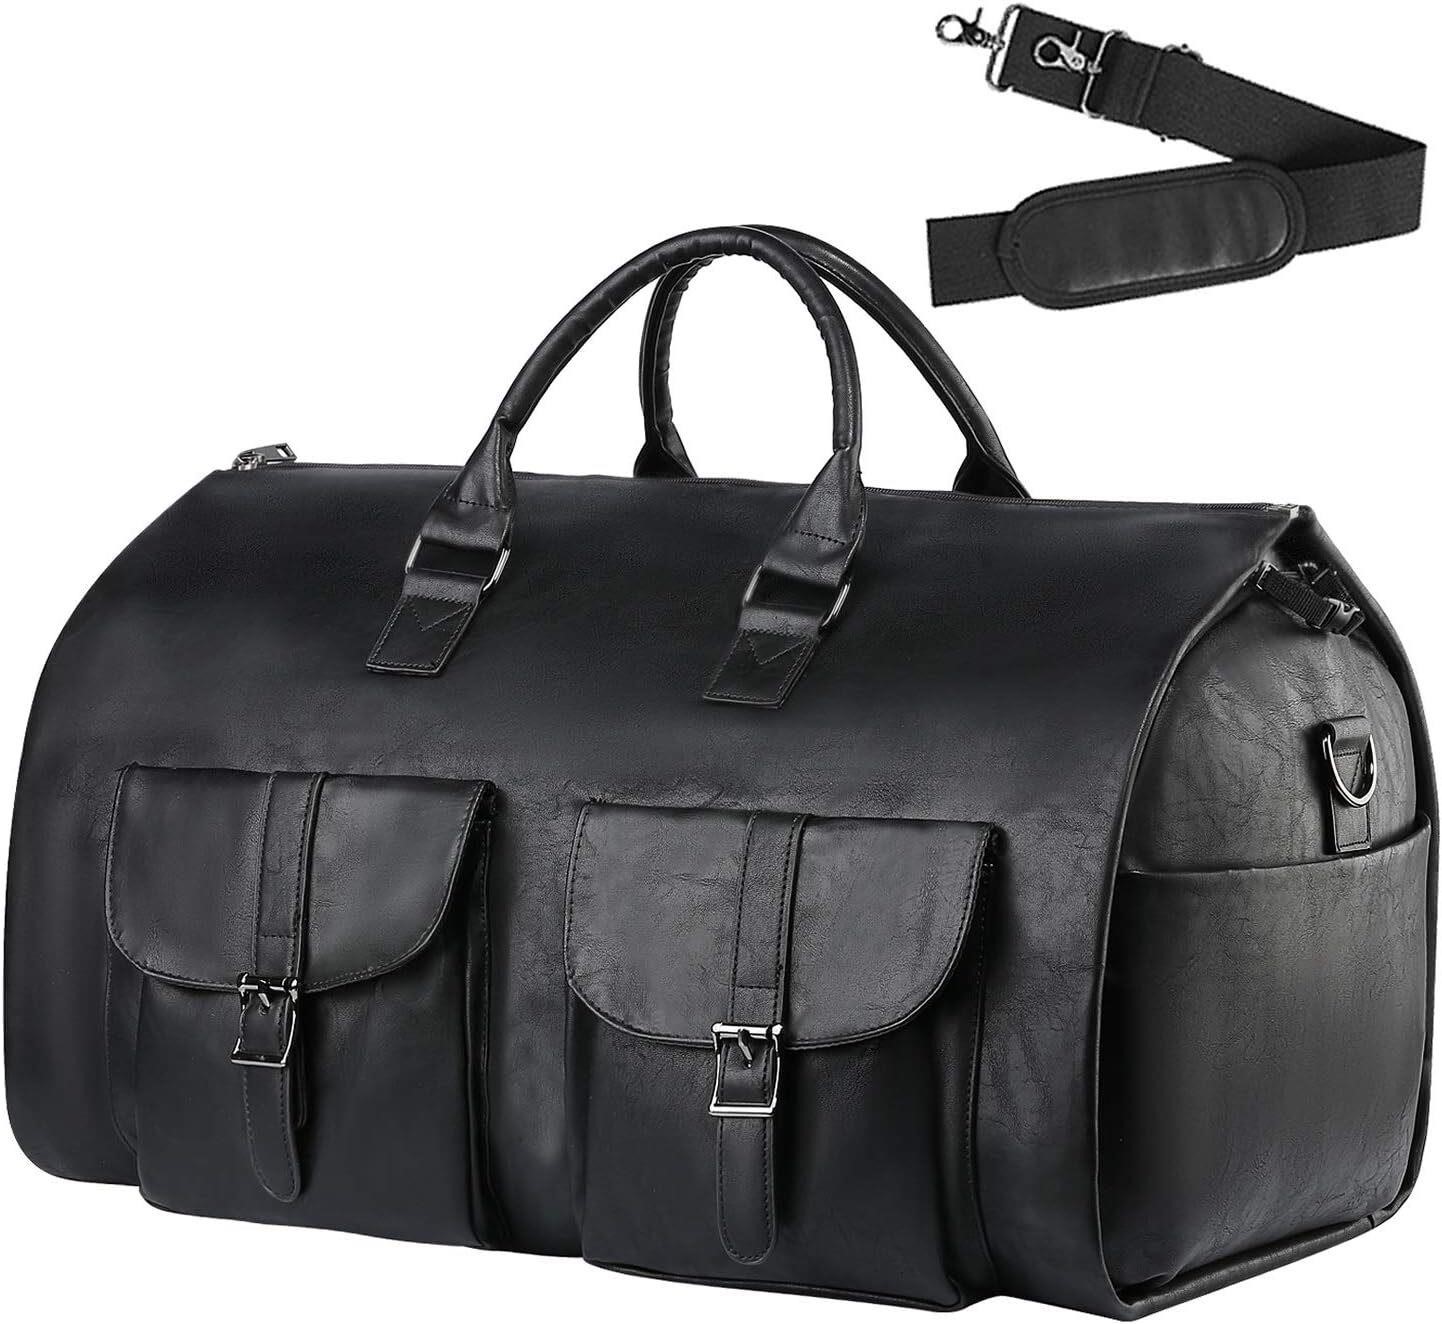 seyfocnia Convertible Travel Garment Bag